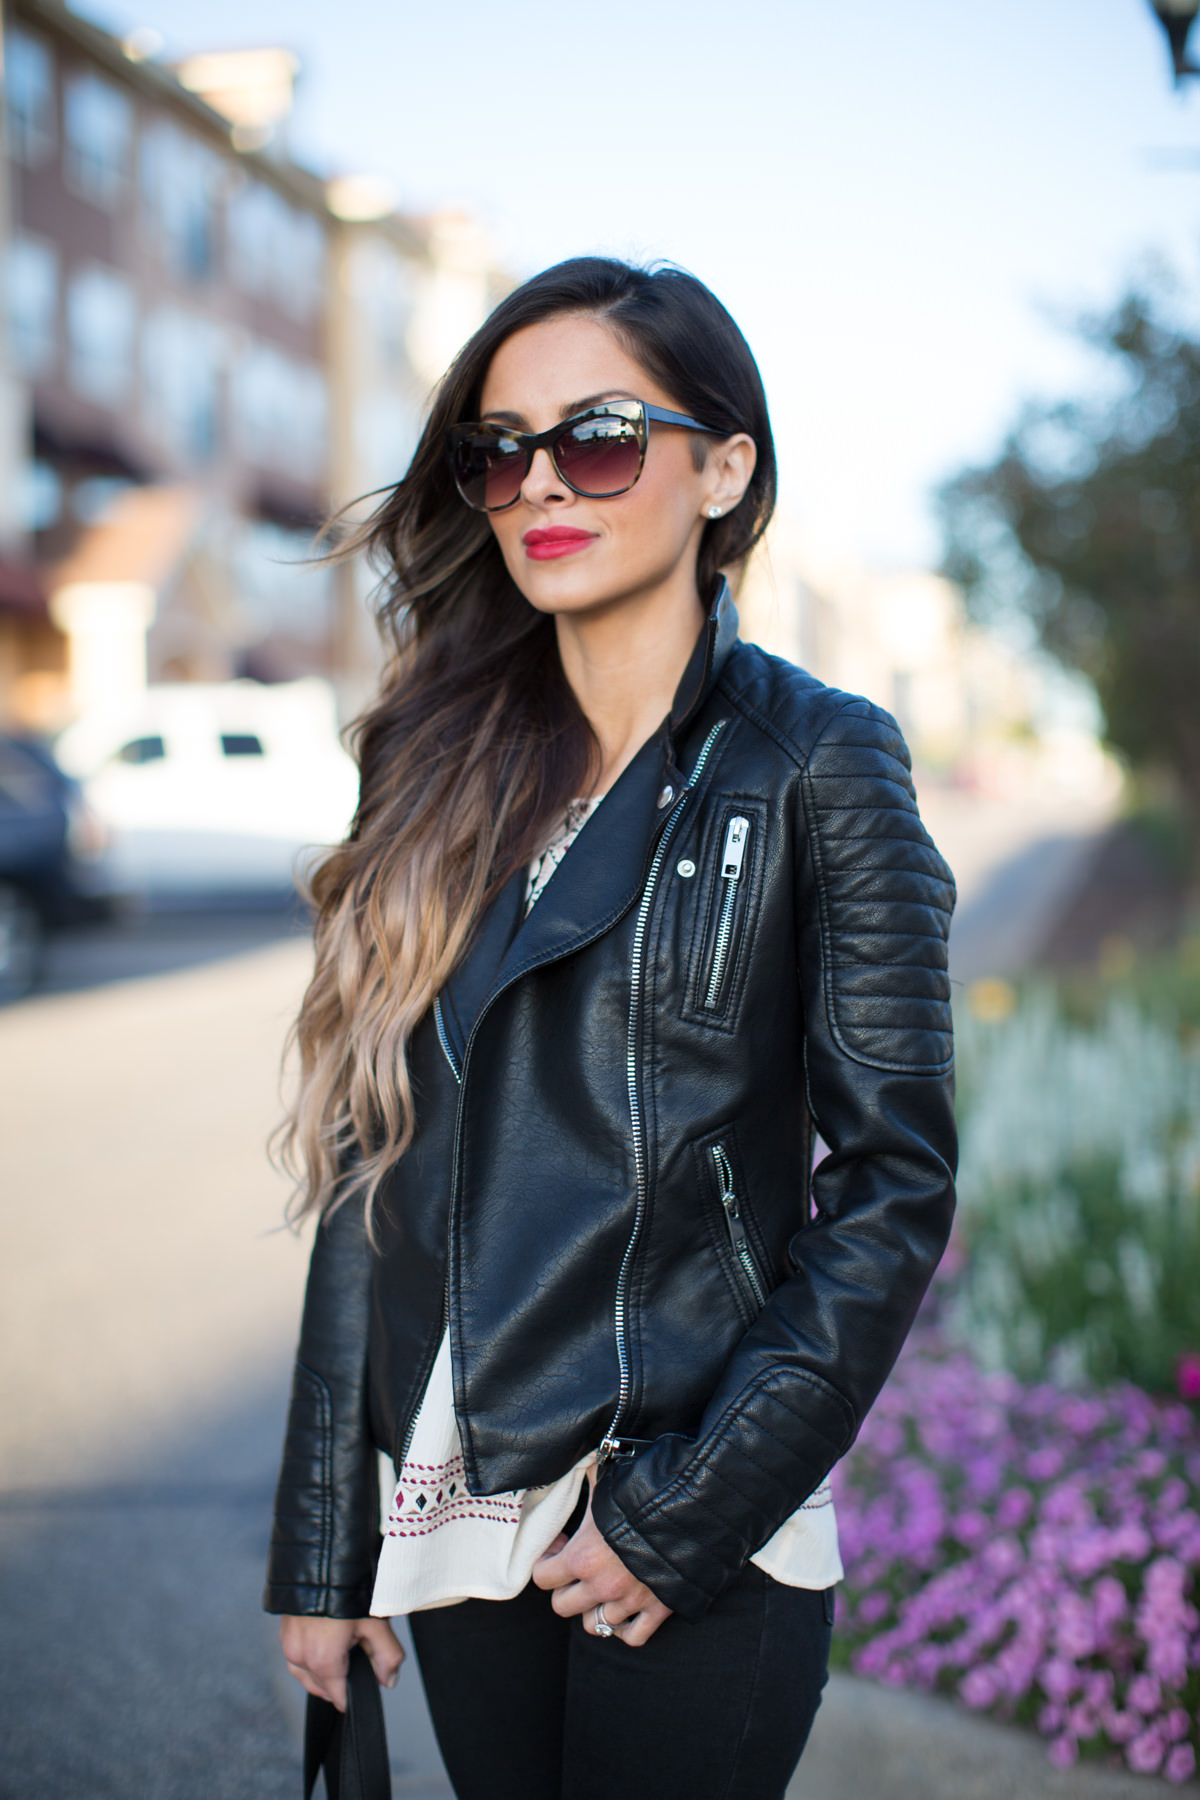 Buy leather jackets online zara – Modern fashion jacket photo blog